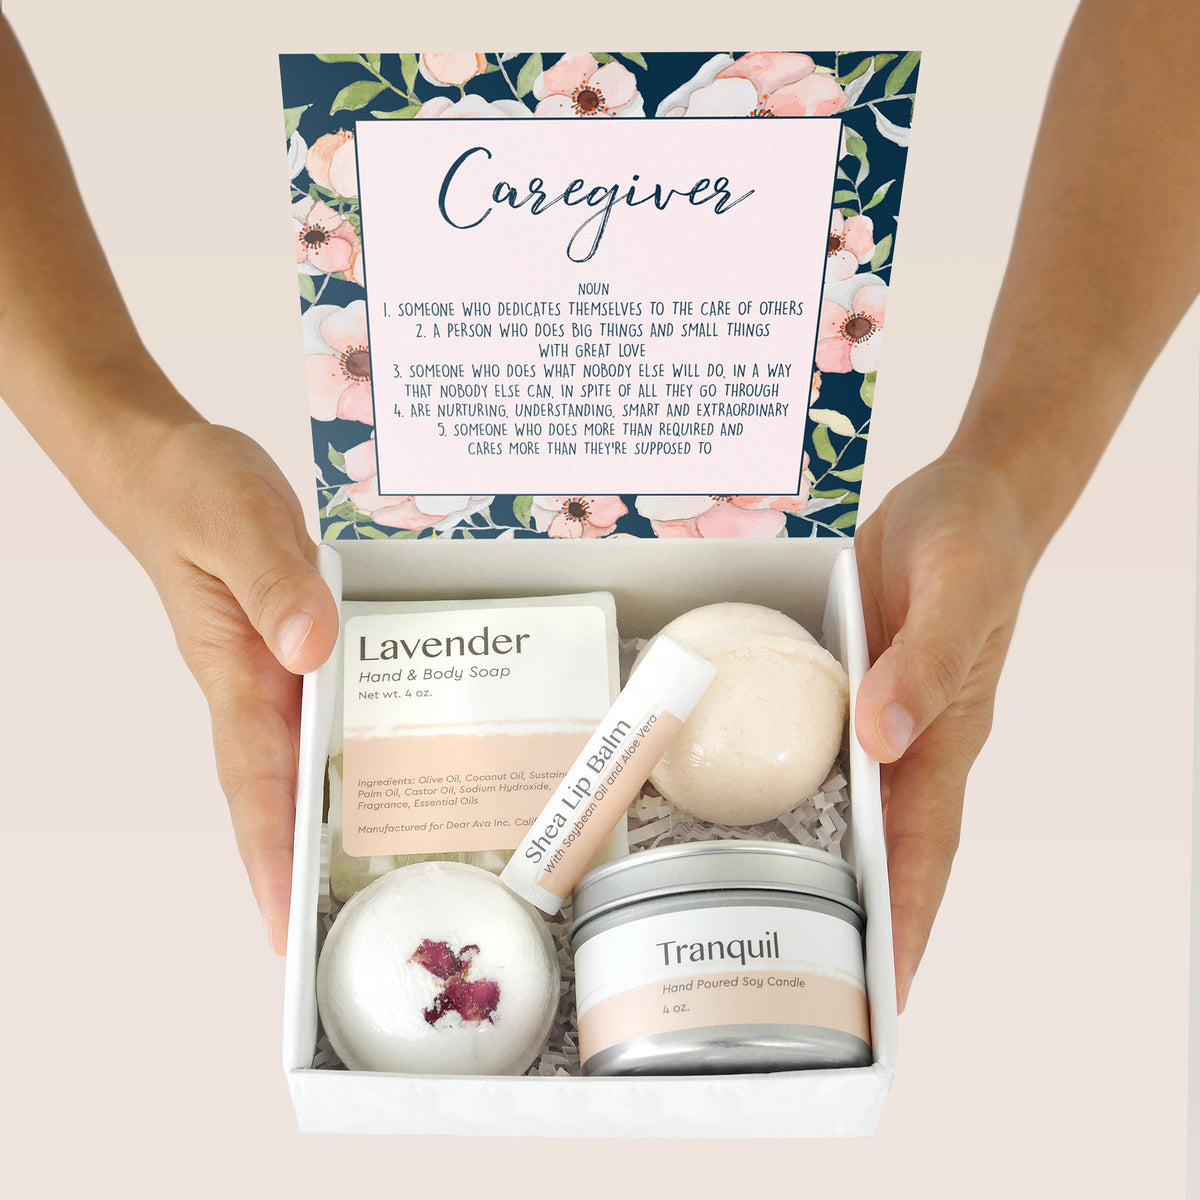 Caregiver Spa Gift Box